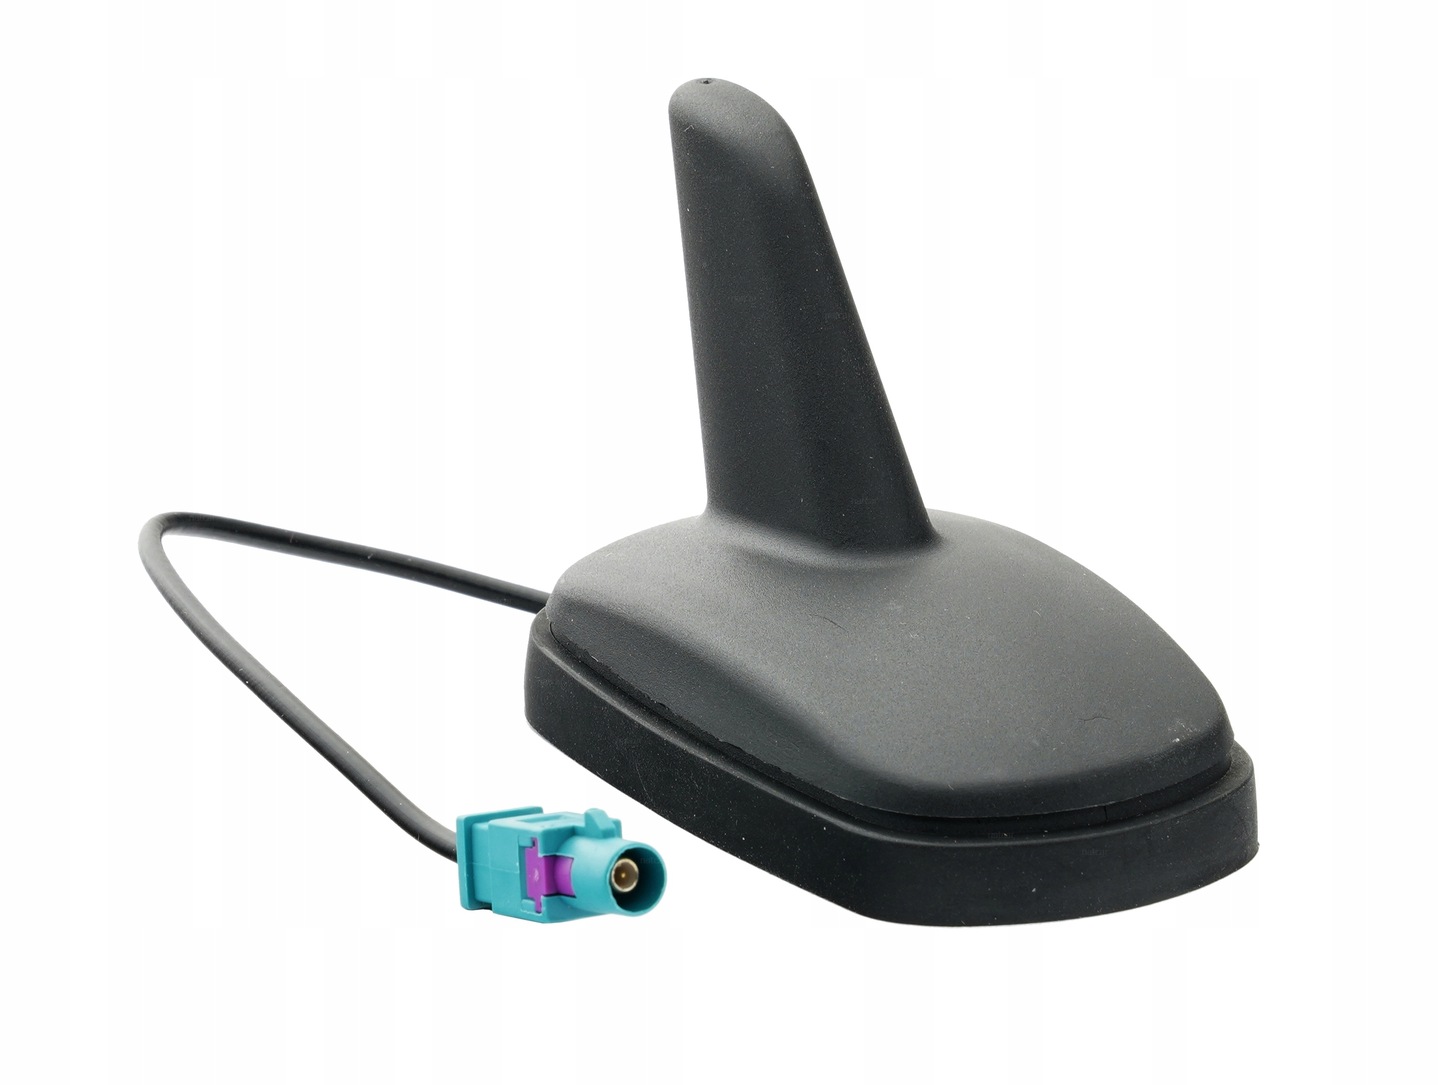 Premium Shark GPS GSM FM Roof Antenna Amplifier Radio Fakra for